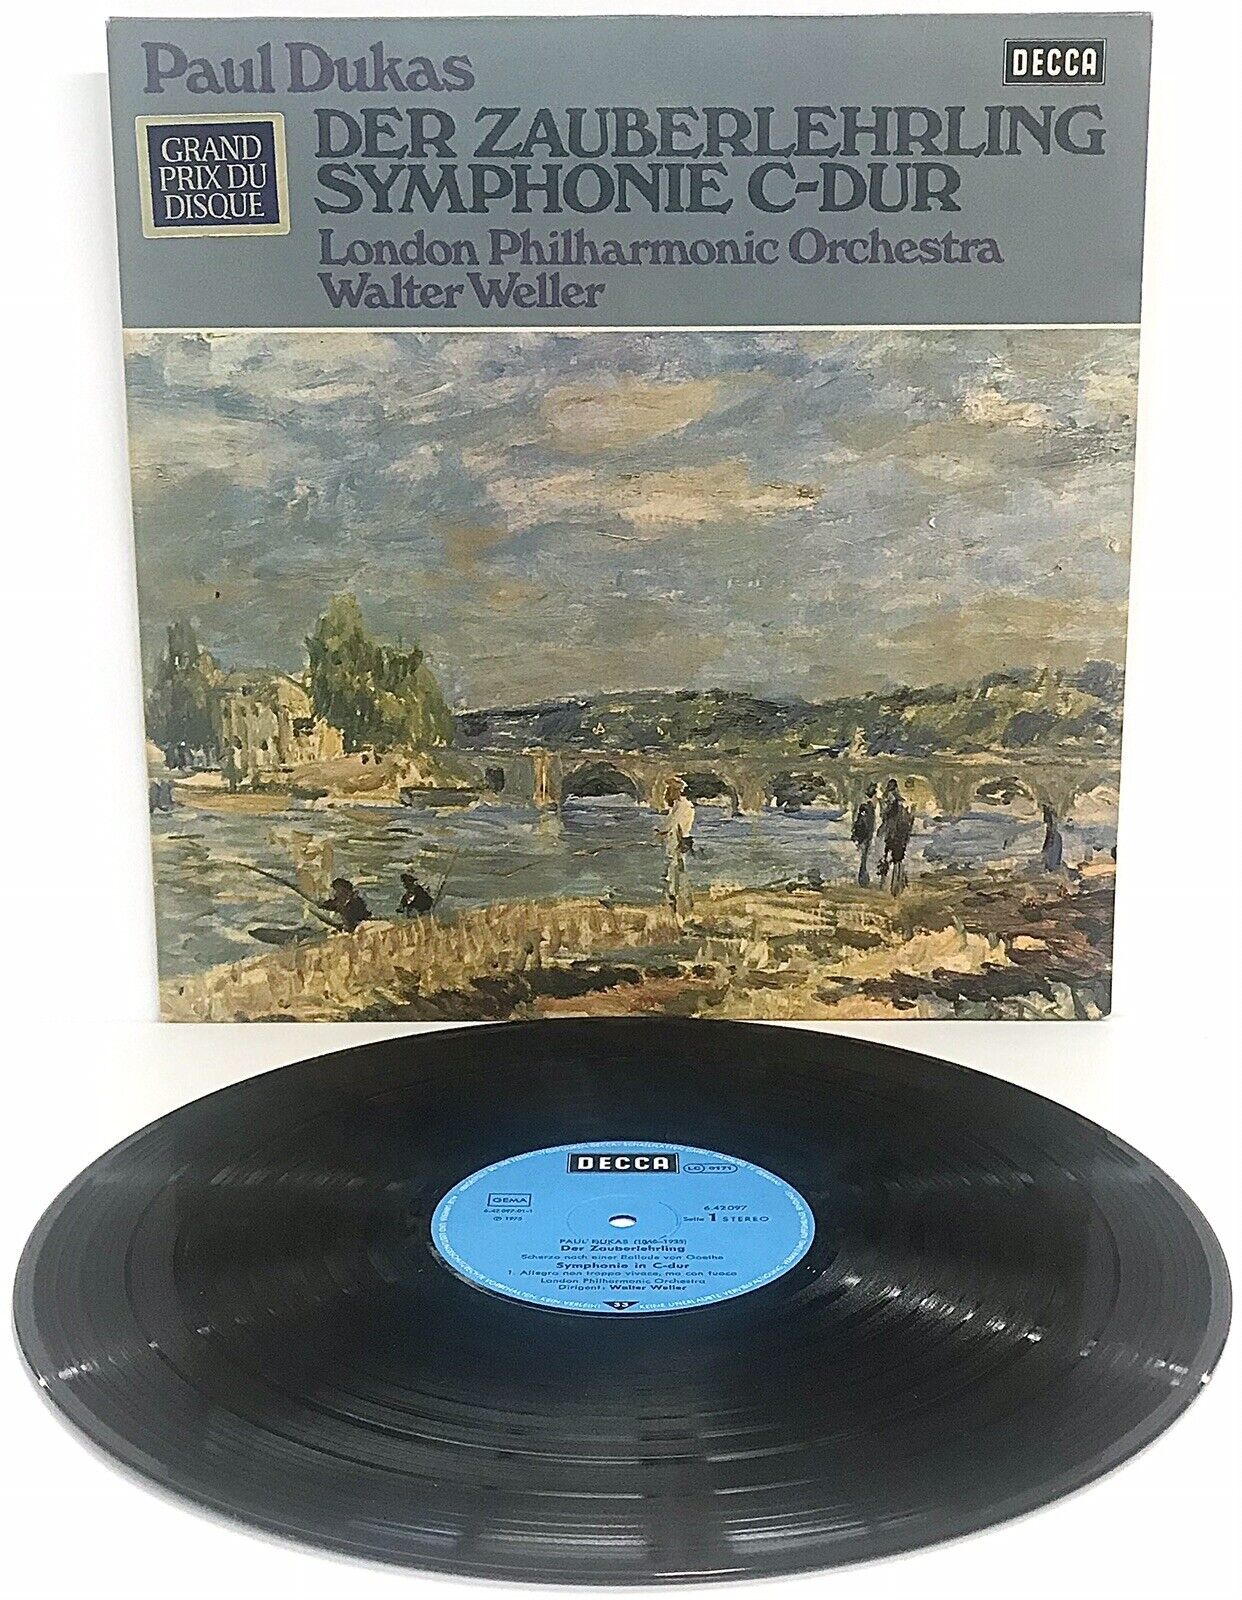 Vinyl LP Paul Dukas Der Zauberlehrling Symphonie C-Dur Walter Weller 6-42097